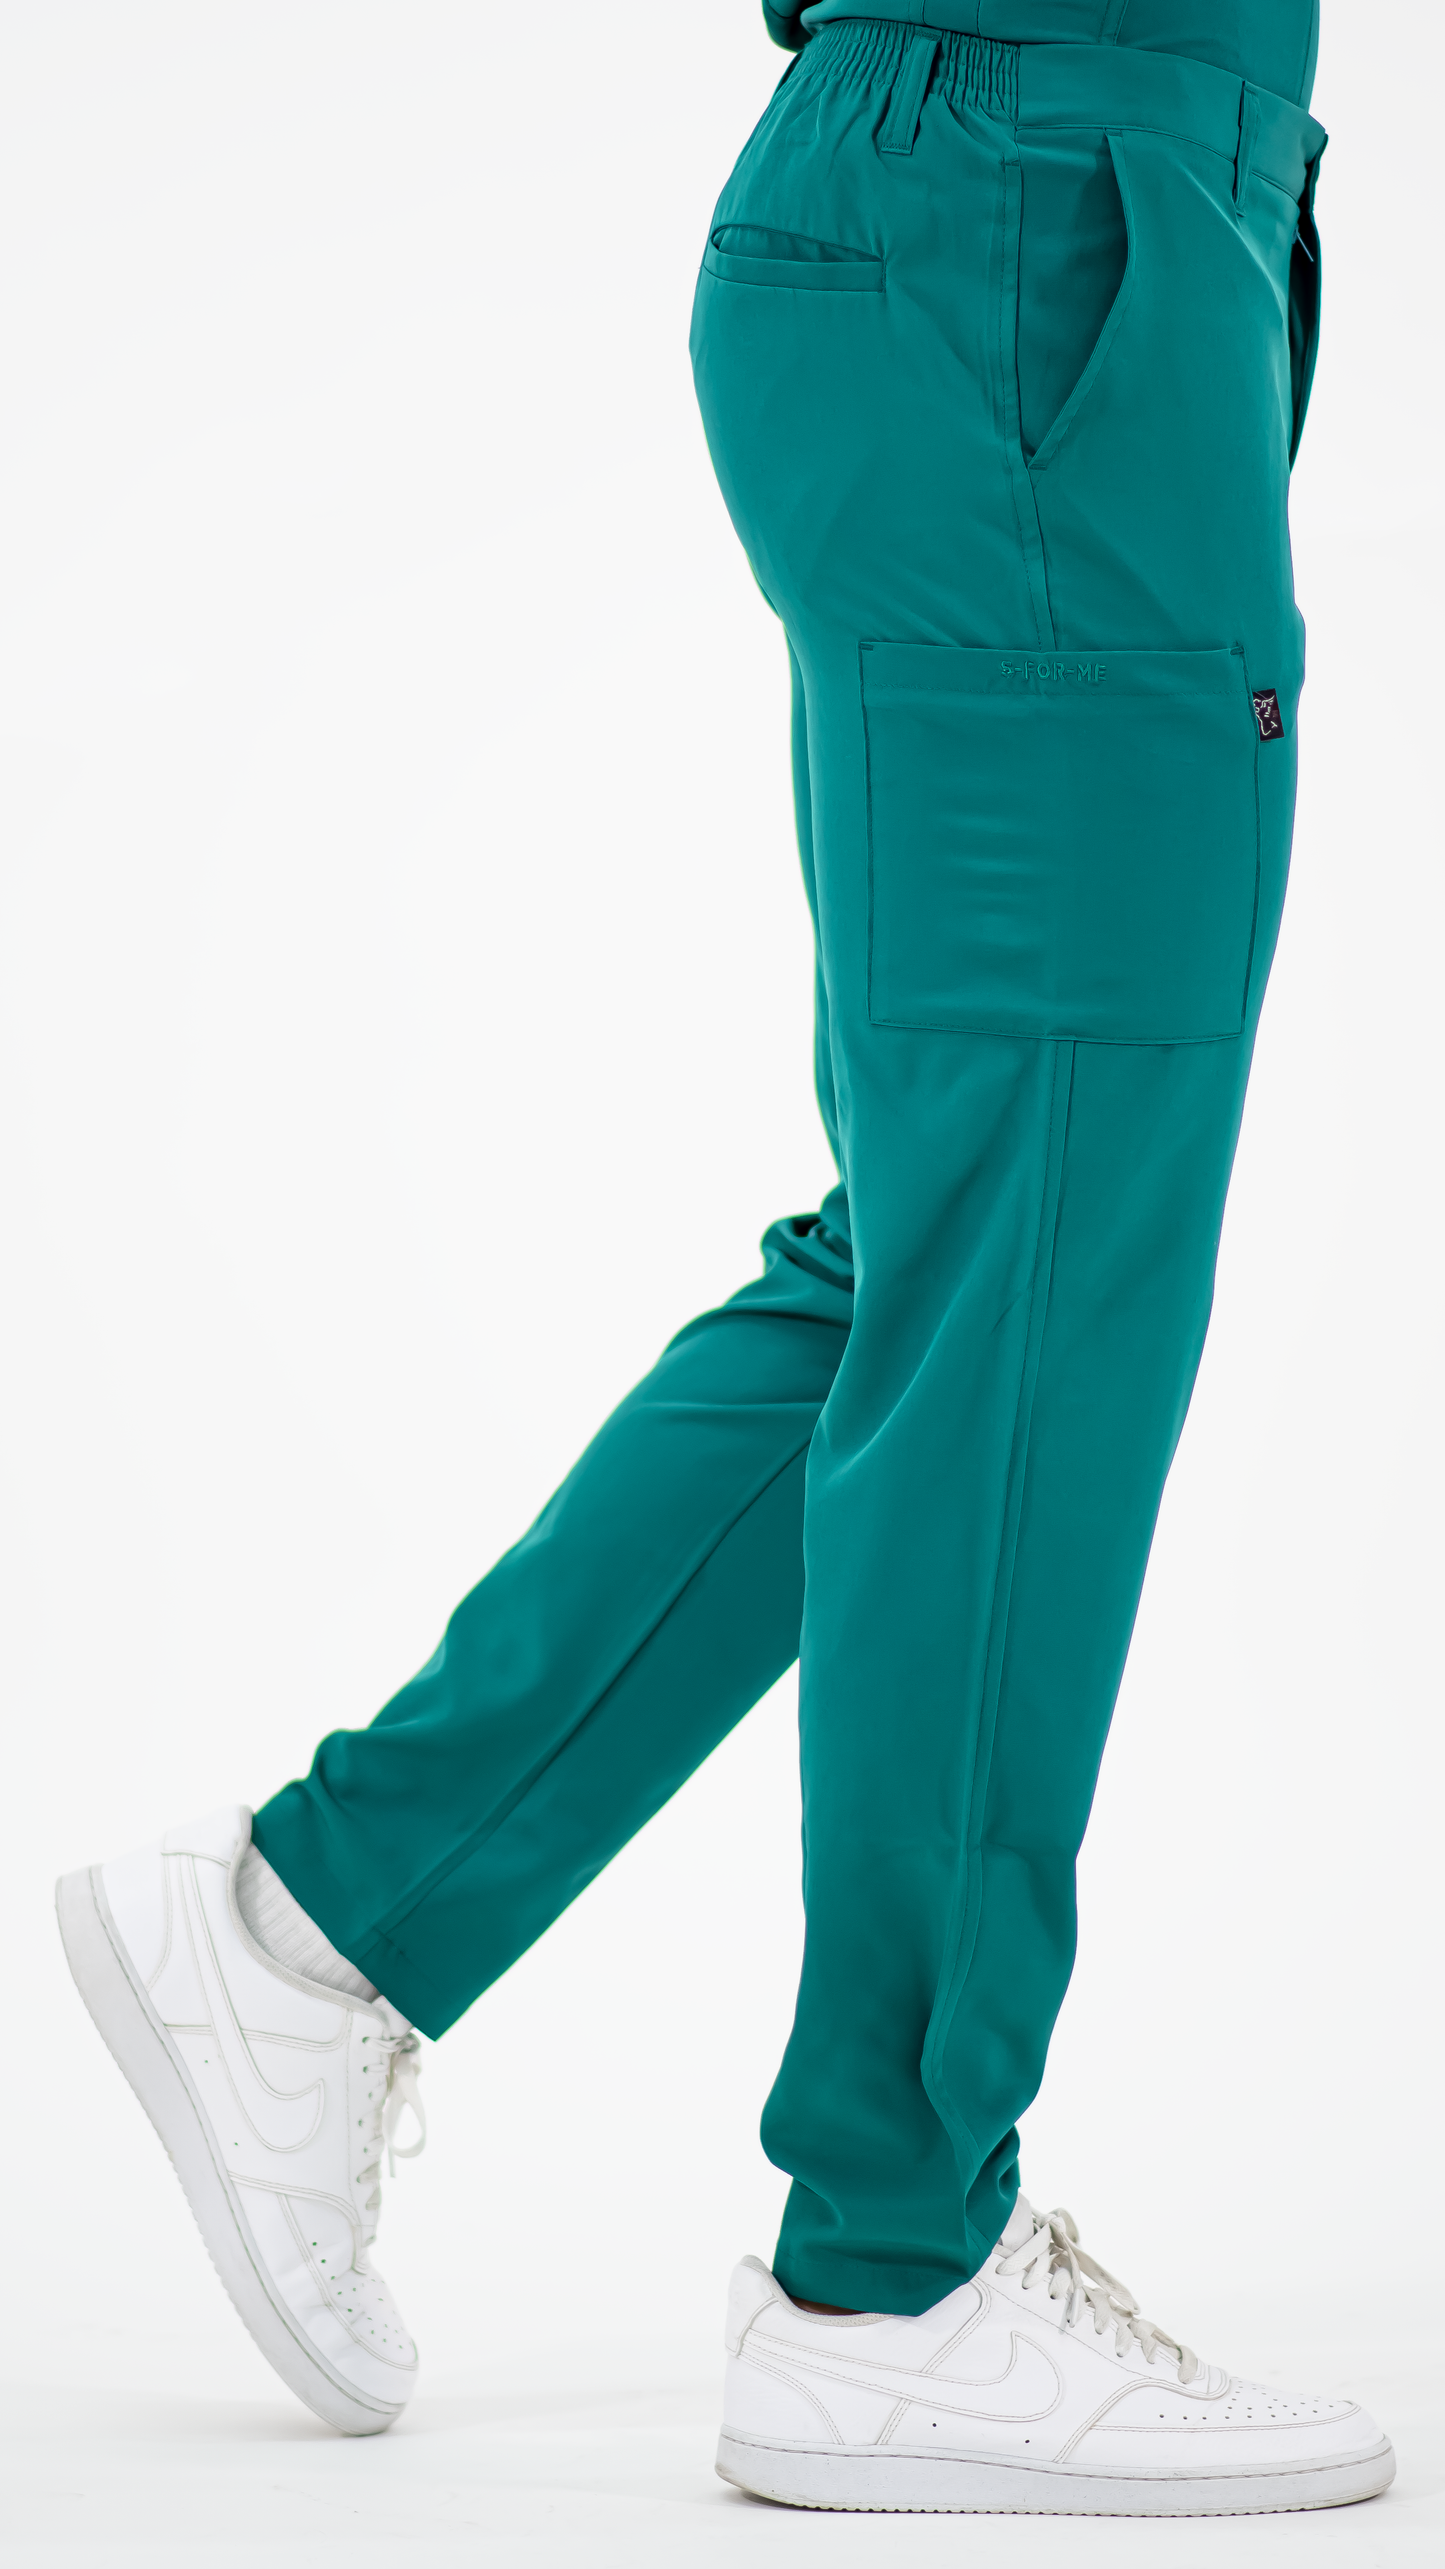 Pants Man Fways Green Turquoise 901